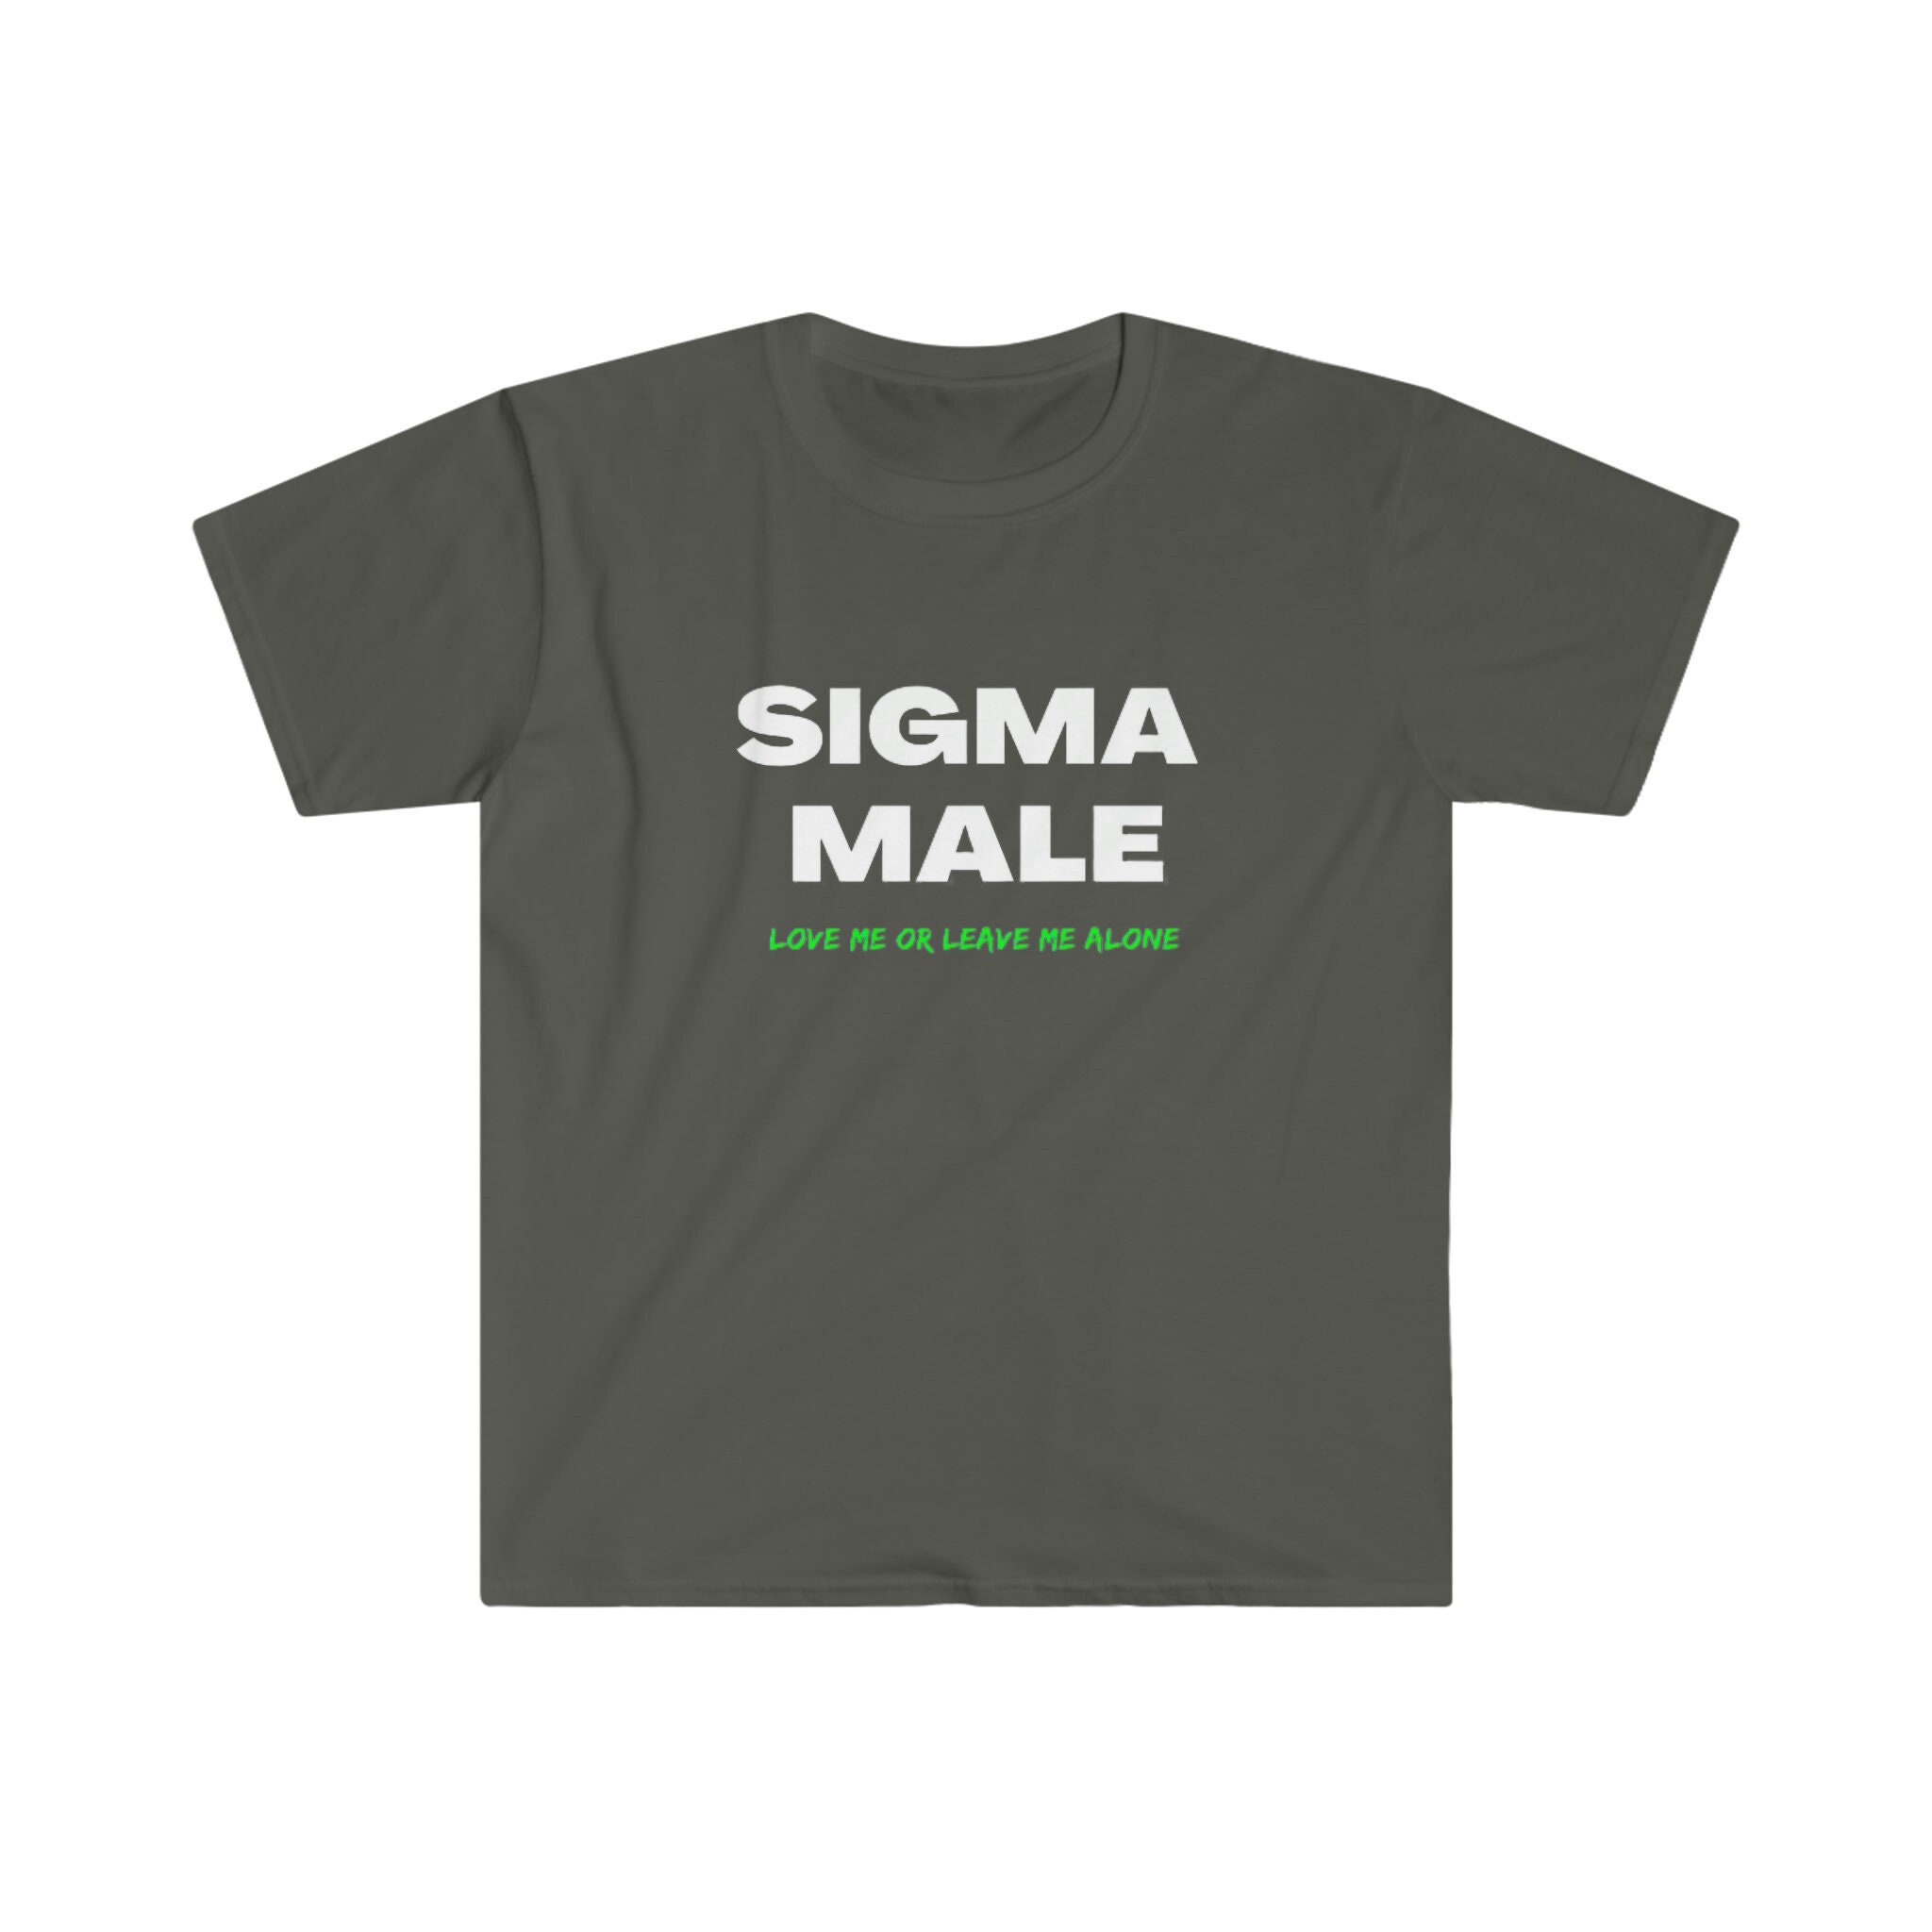  Gigachad Sigma Male Bodybuilder Giga Chad Sigma Grindset  T-Shirt : Clothing, Shoes & Jewelry